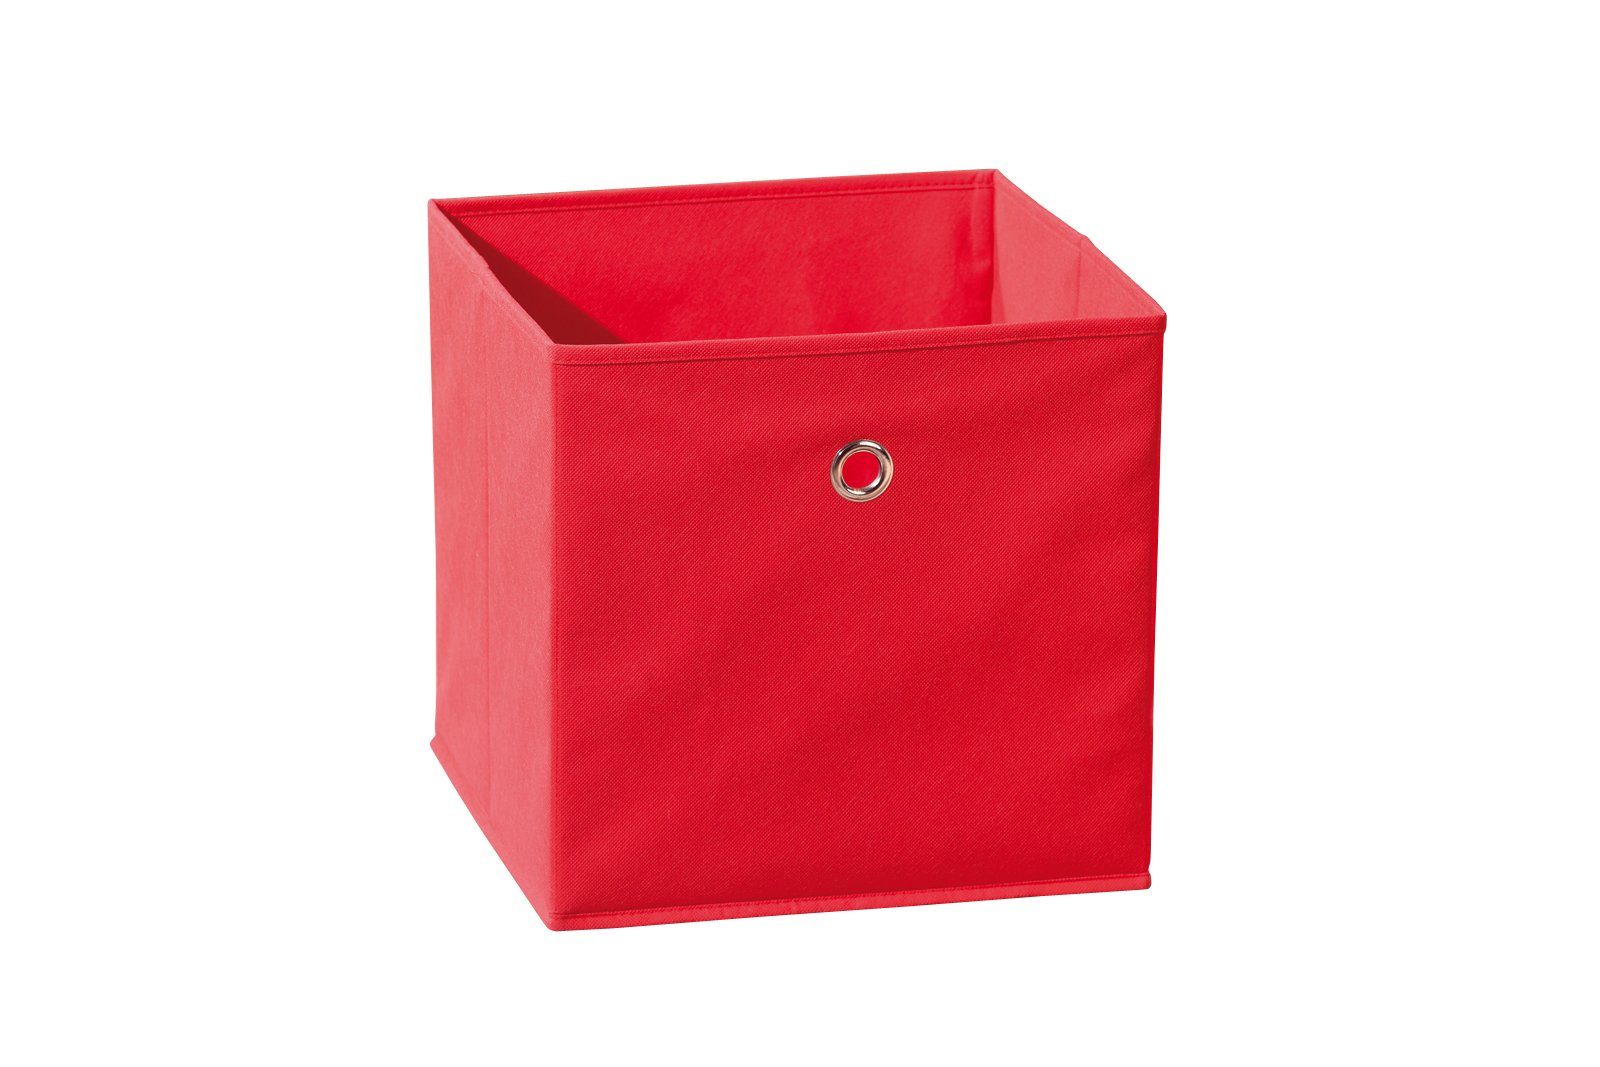 VCM 10er Set Stoff Faltbox Klappbox Boxas Farbe: Pink